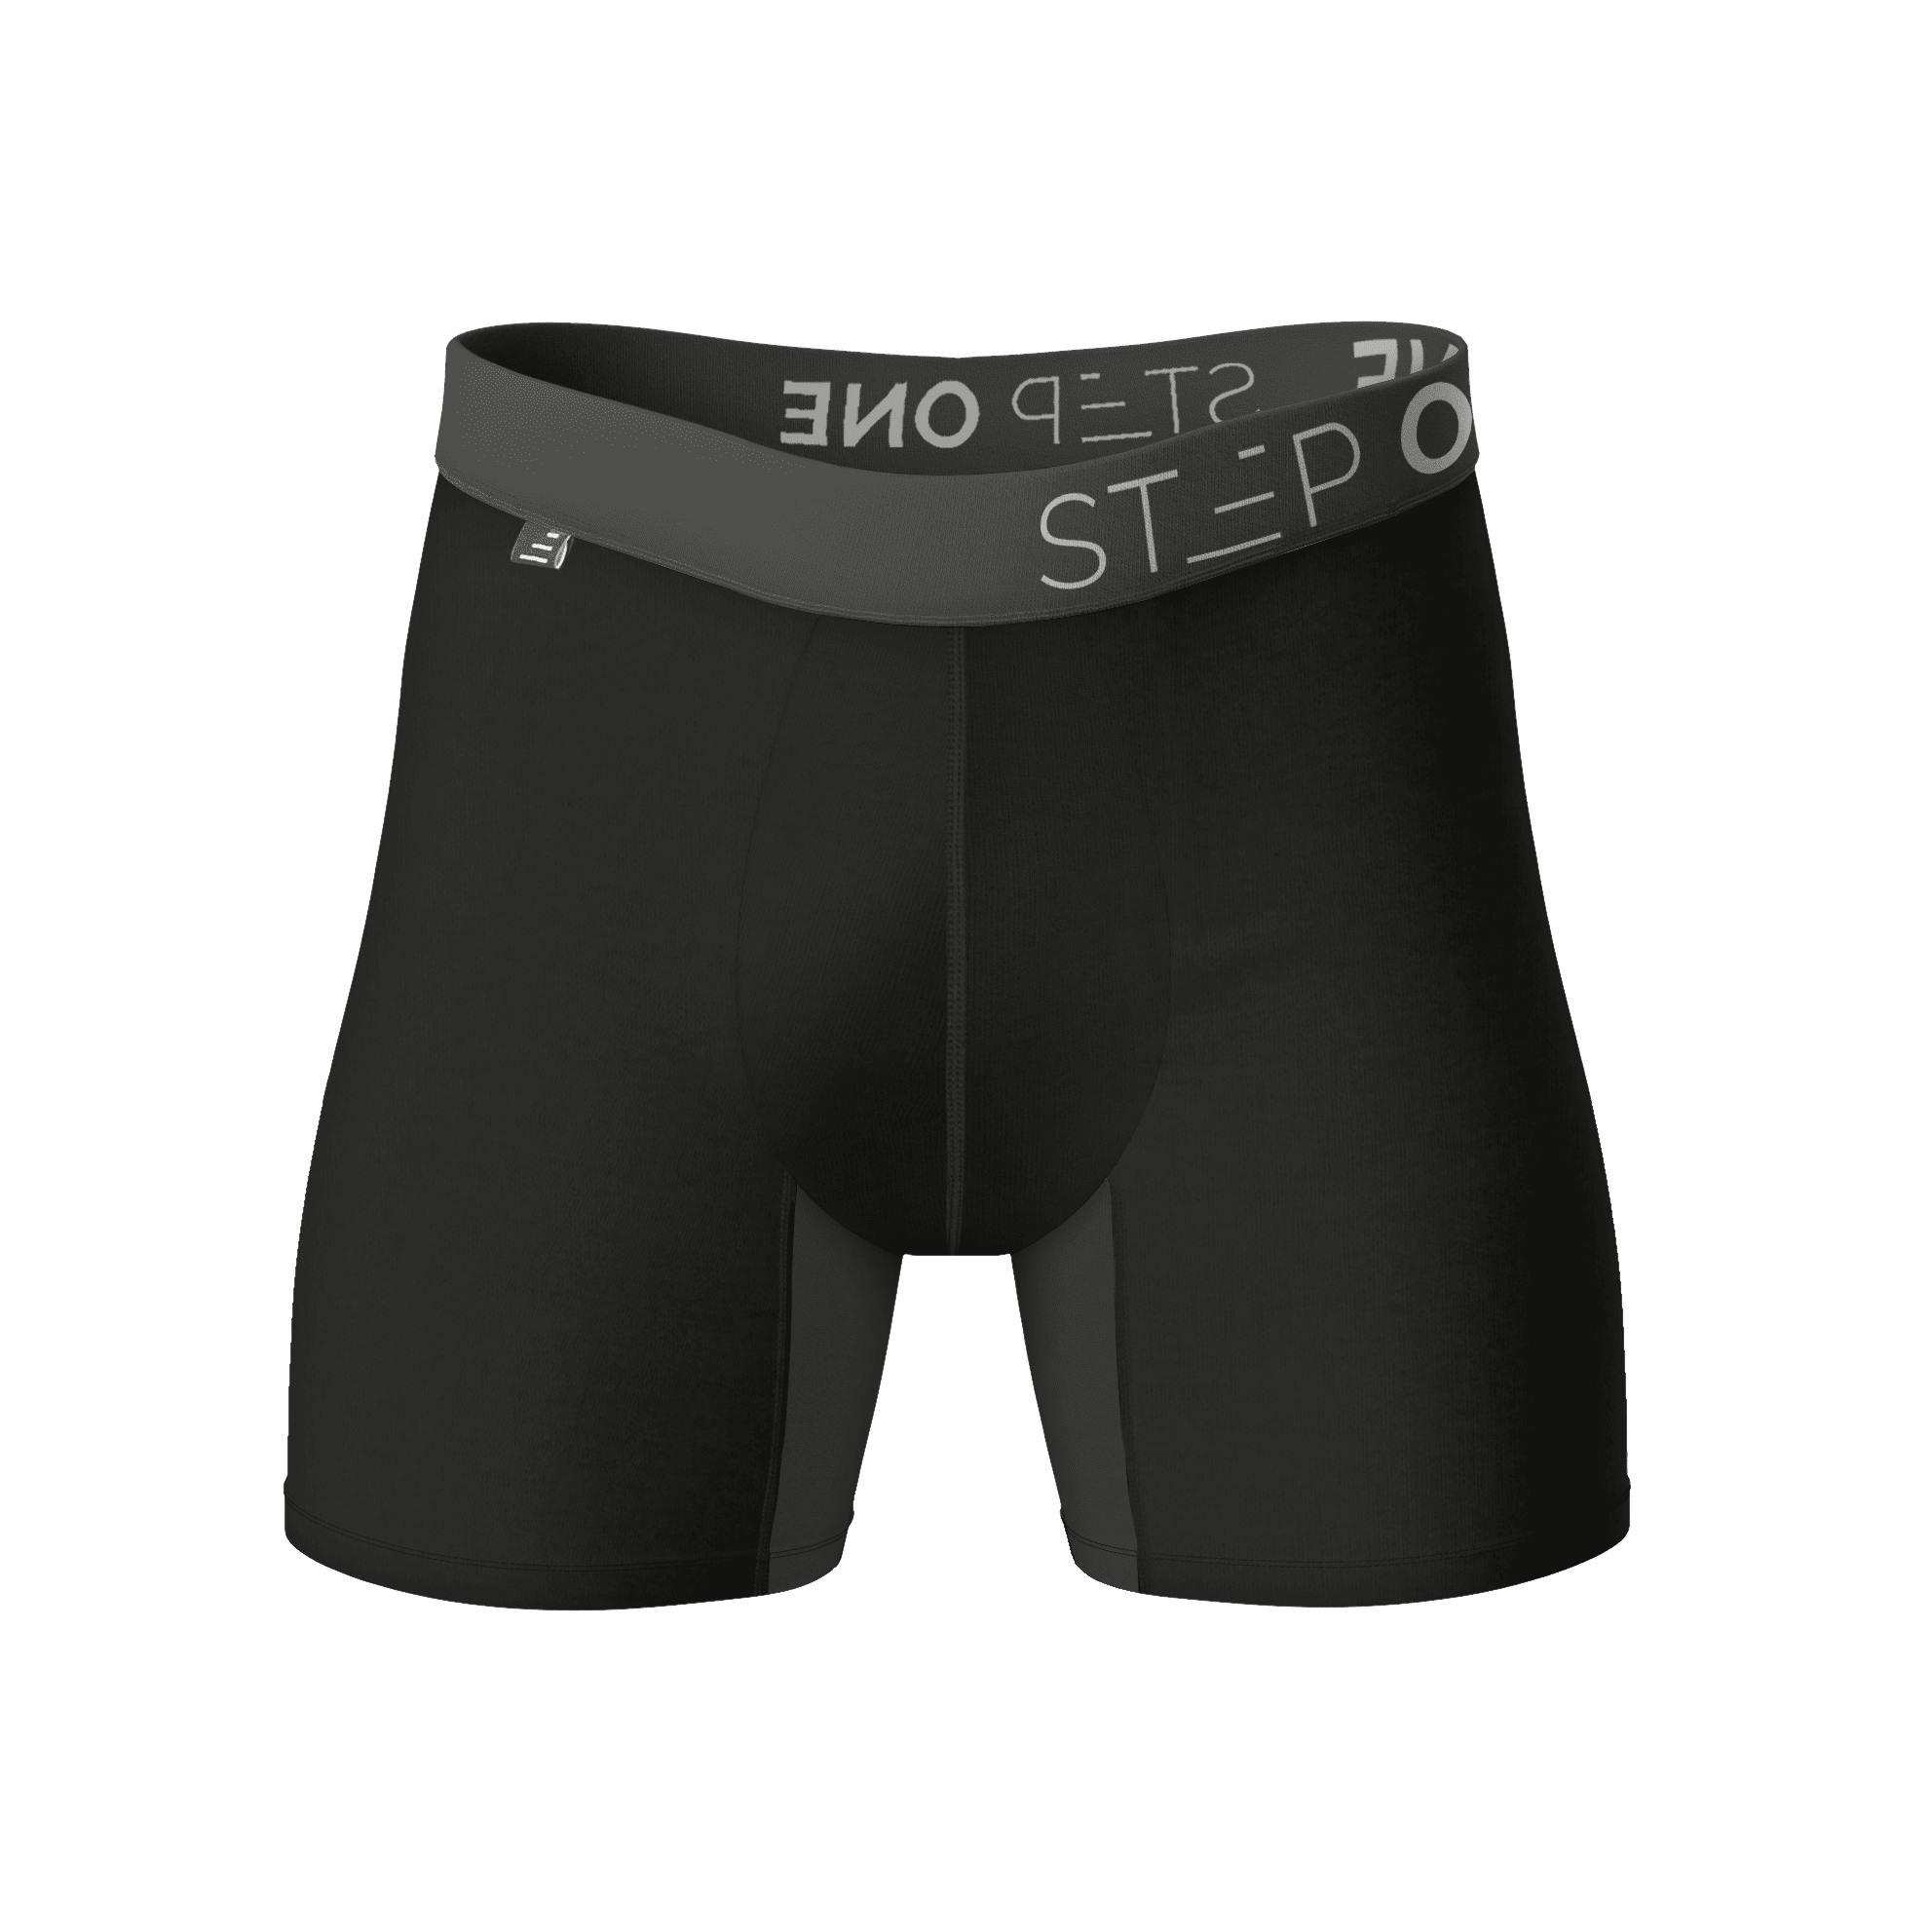 BRADY Brand Mens XL Boxer Briefs Set of 3 Colors Brand NEW